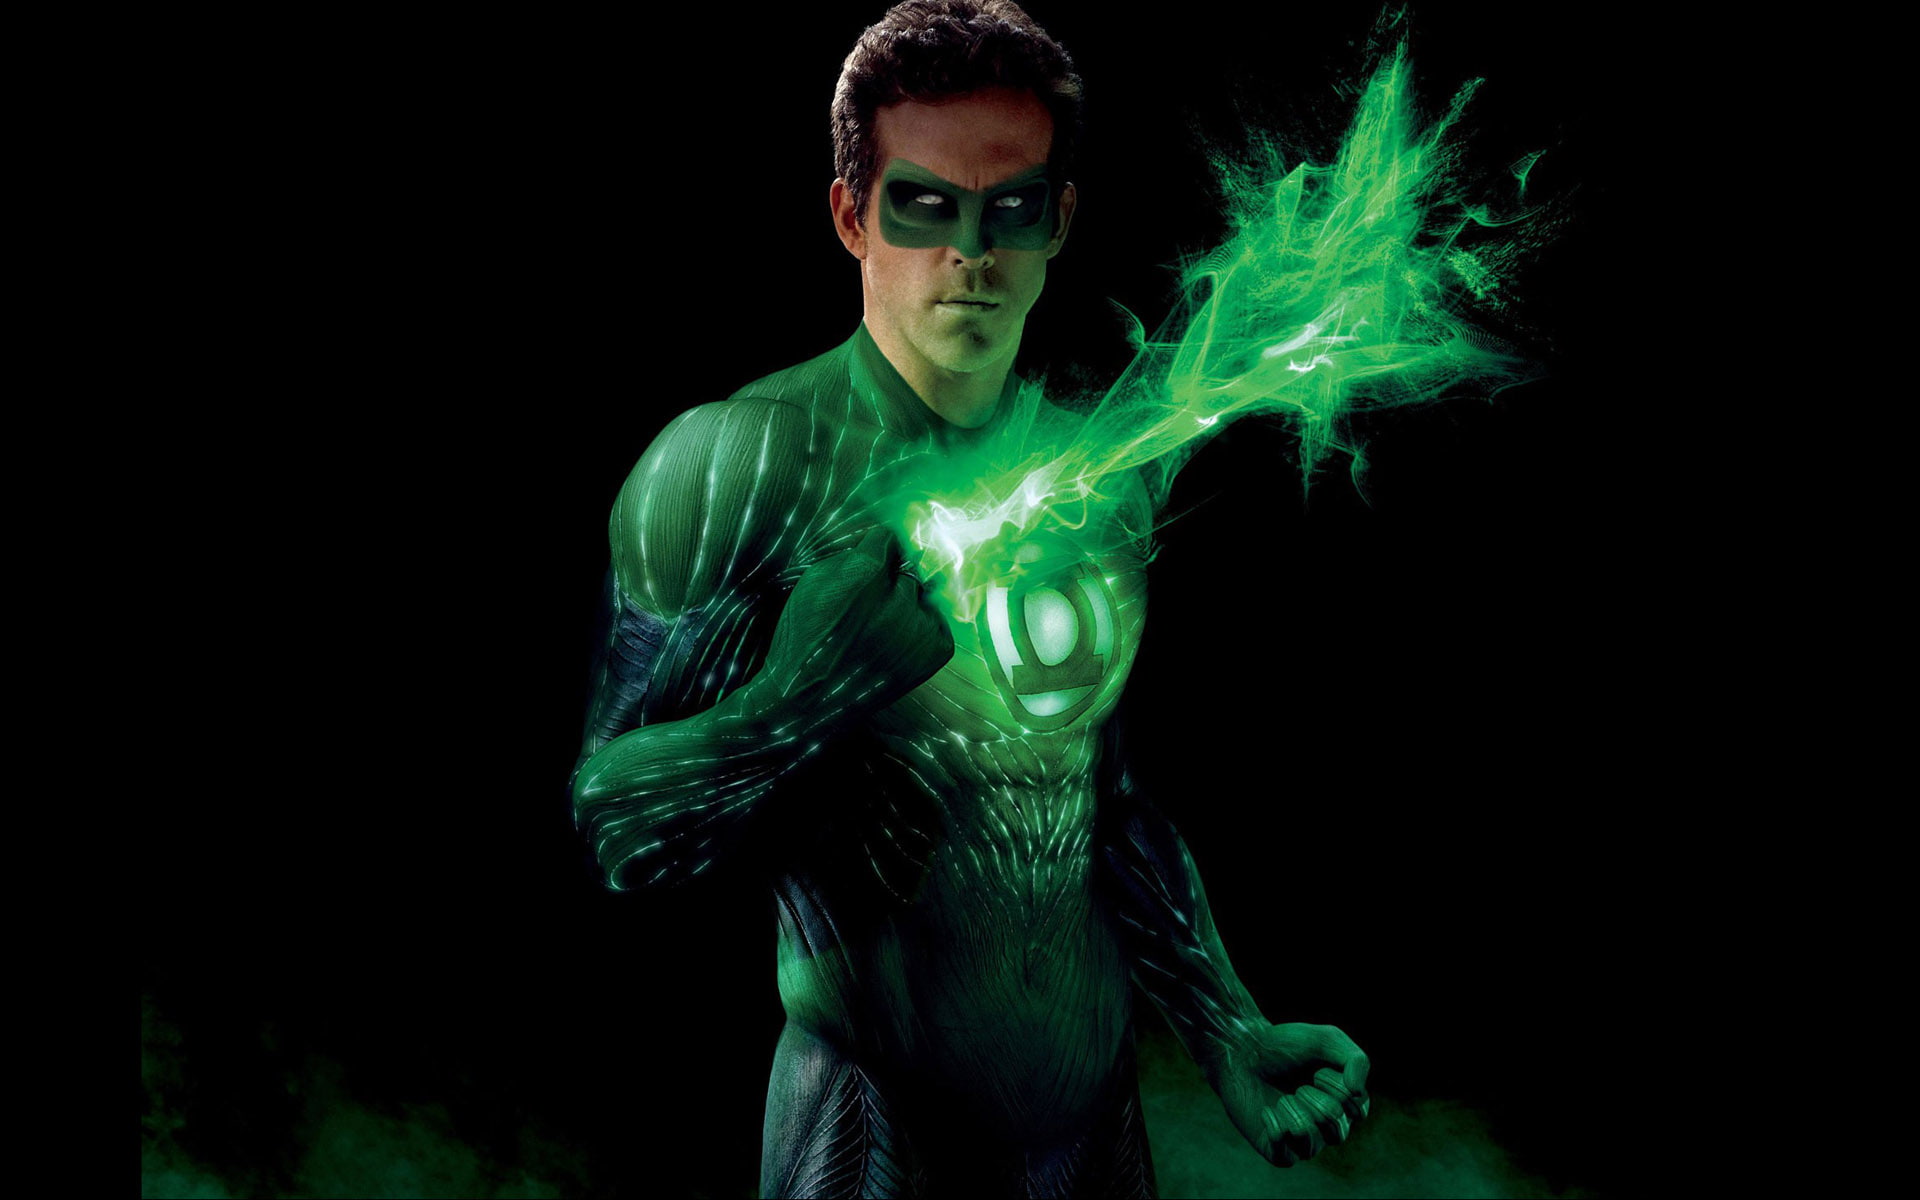 Green Lantern Hal Jordan Ryan Reynolds Story Of The Superhero On The Big Screen Hd Wallpapers For Mobile Phones Tablet And Laptop 1920×1200